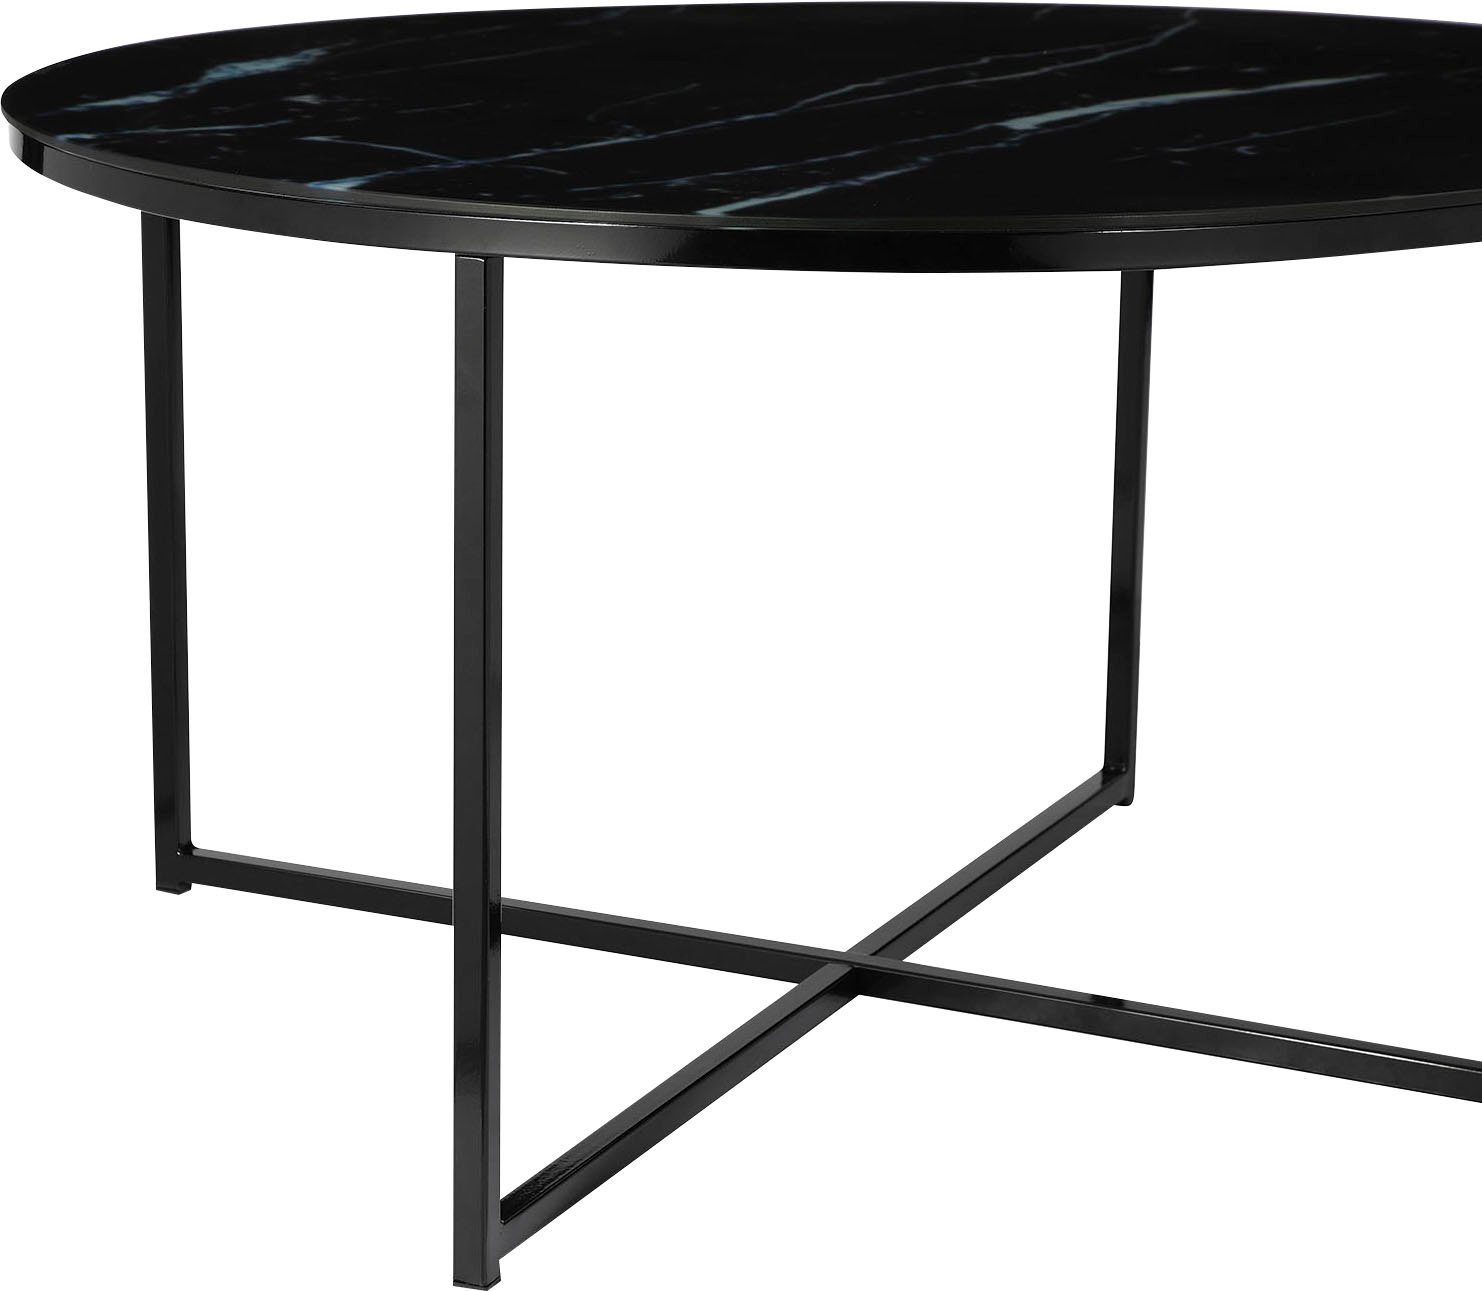 SalesFever Couchtisch, Tischplatte in | Schwarz Schwarz/schwarz Marmoroptik | Schwarz